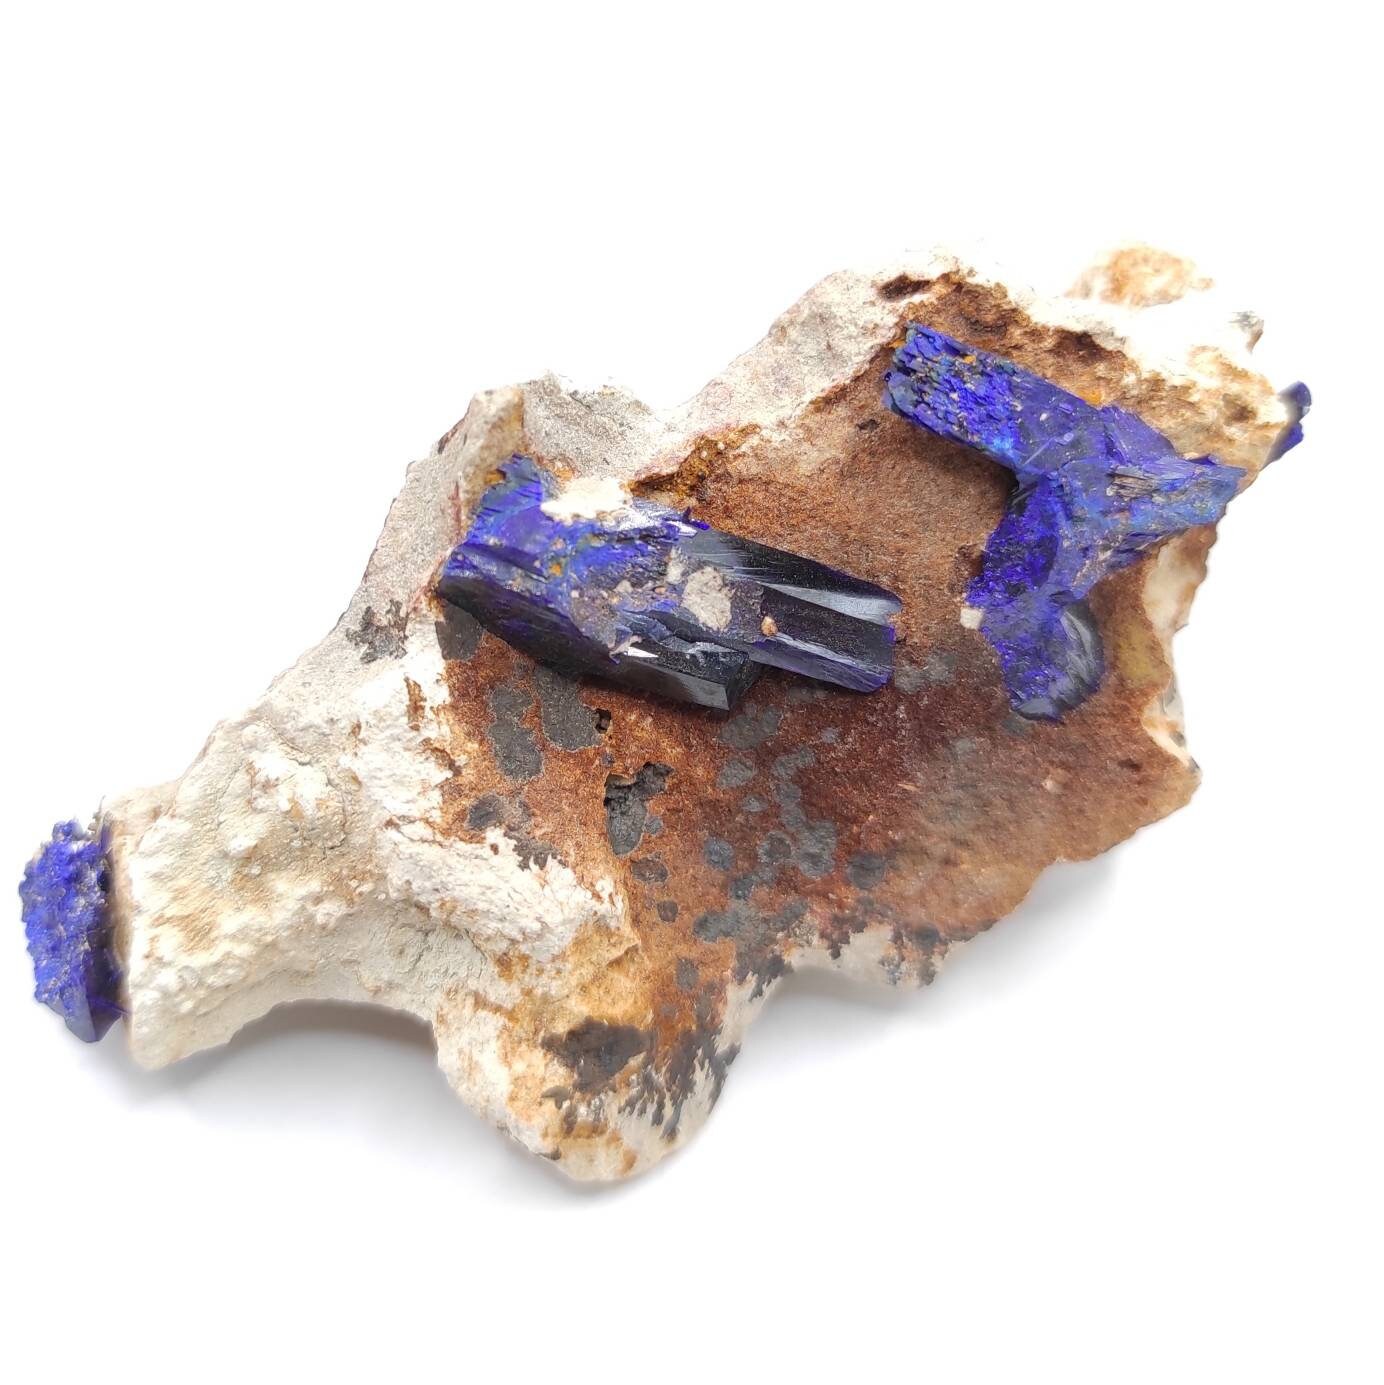 106g Azurite in Matrix - Kerrouchen, Morocco - Blue Azurite Specimen in Matrix - Crystallized Blue Azurite - High Quality Azurite Mineral